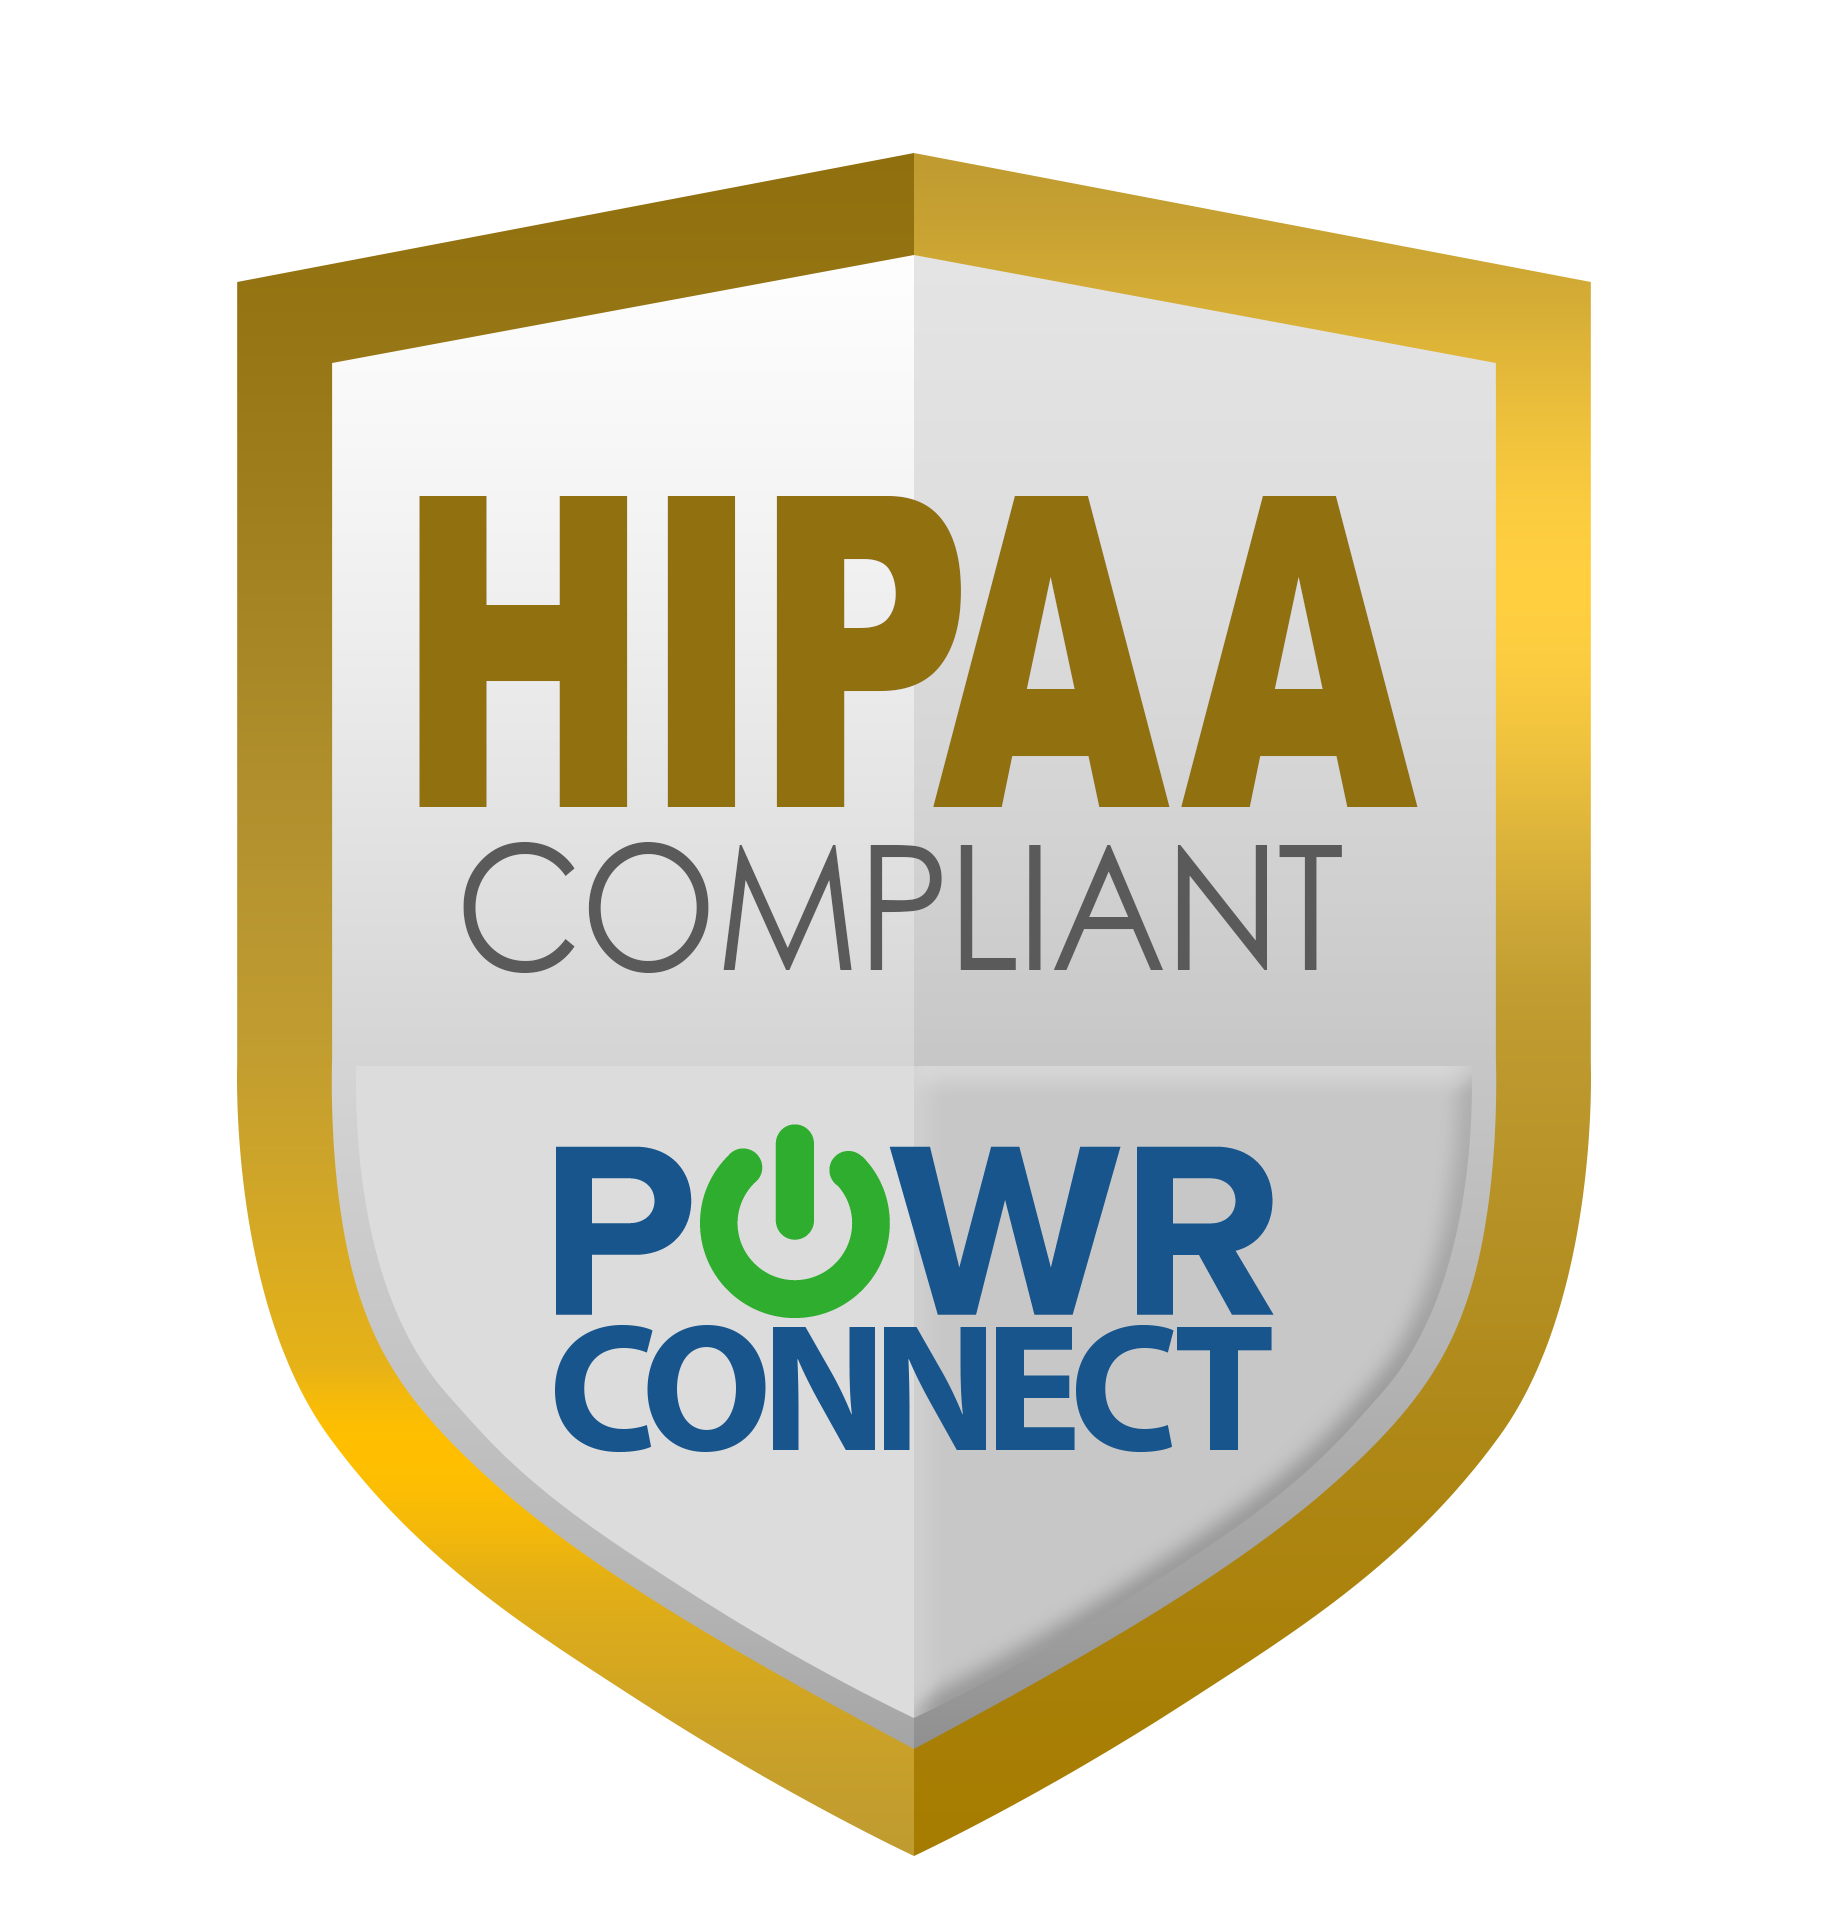 hipaa-compliant-powr-connect
